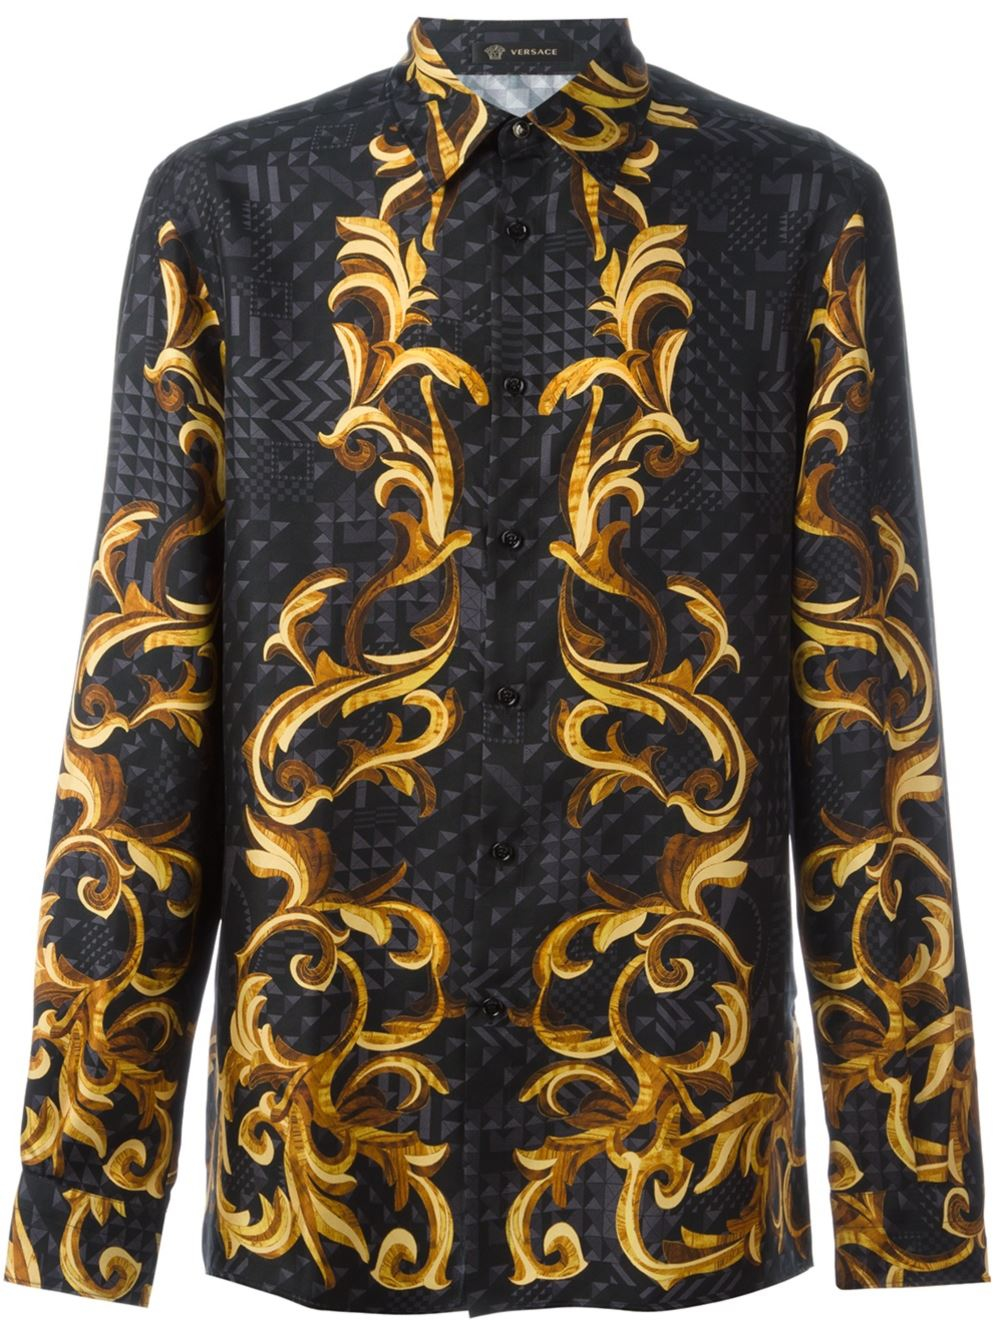 Versace Silk Baroque Print Shirt in Black for Men - Lyst